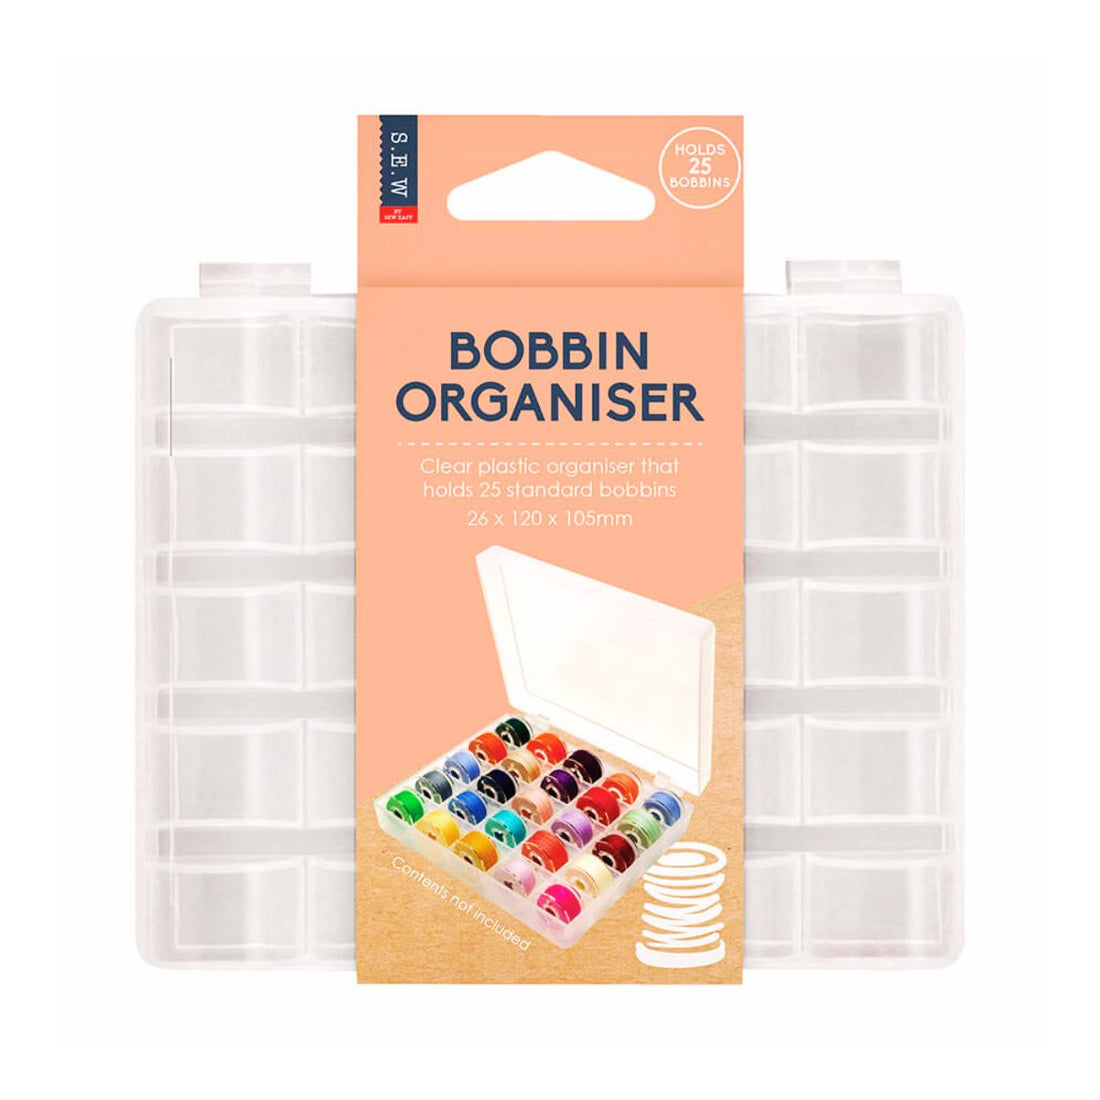 bobbin storage box that holds 25 bobbins